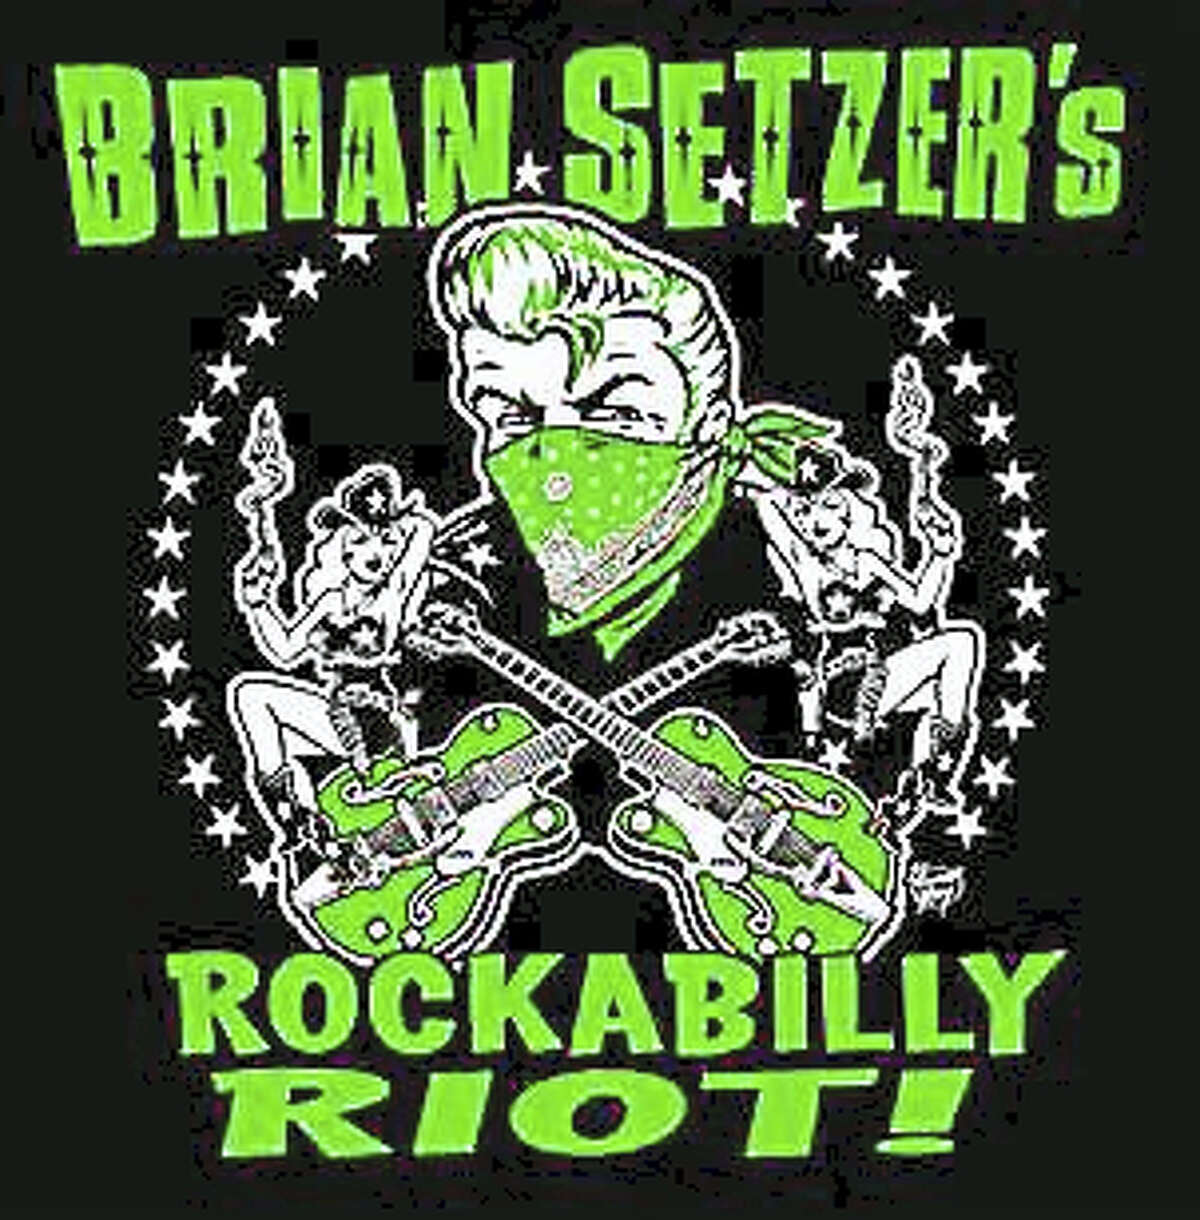 Brian Setzer brings his rockabilly show to Danbury in June.